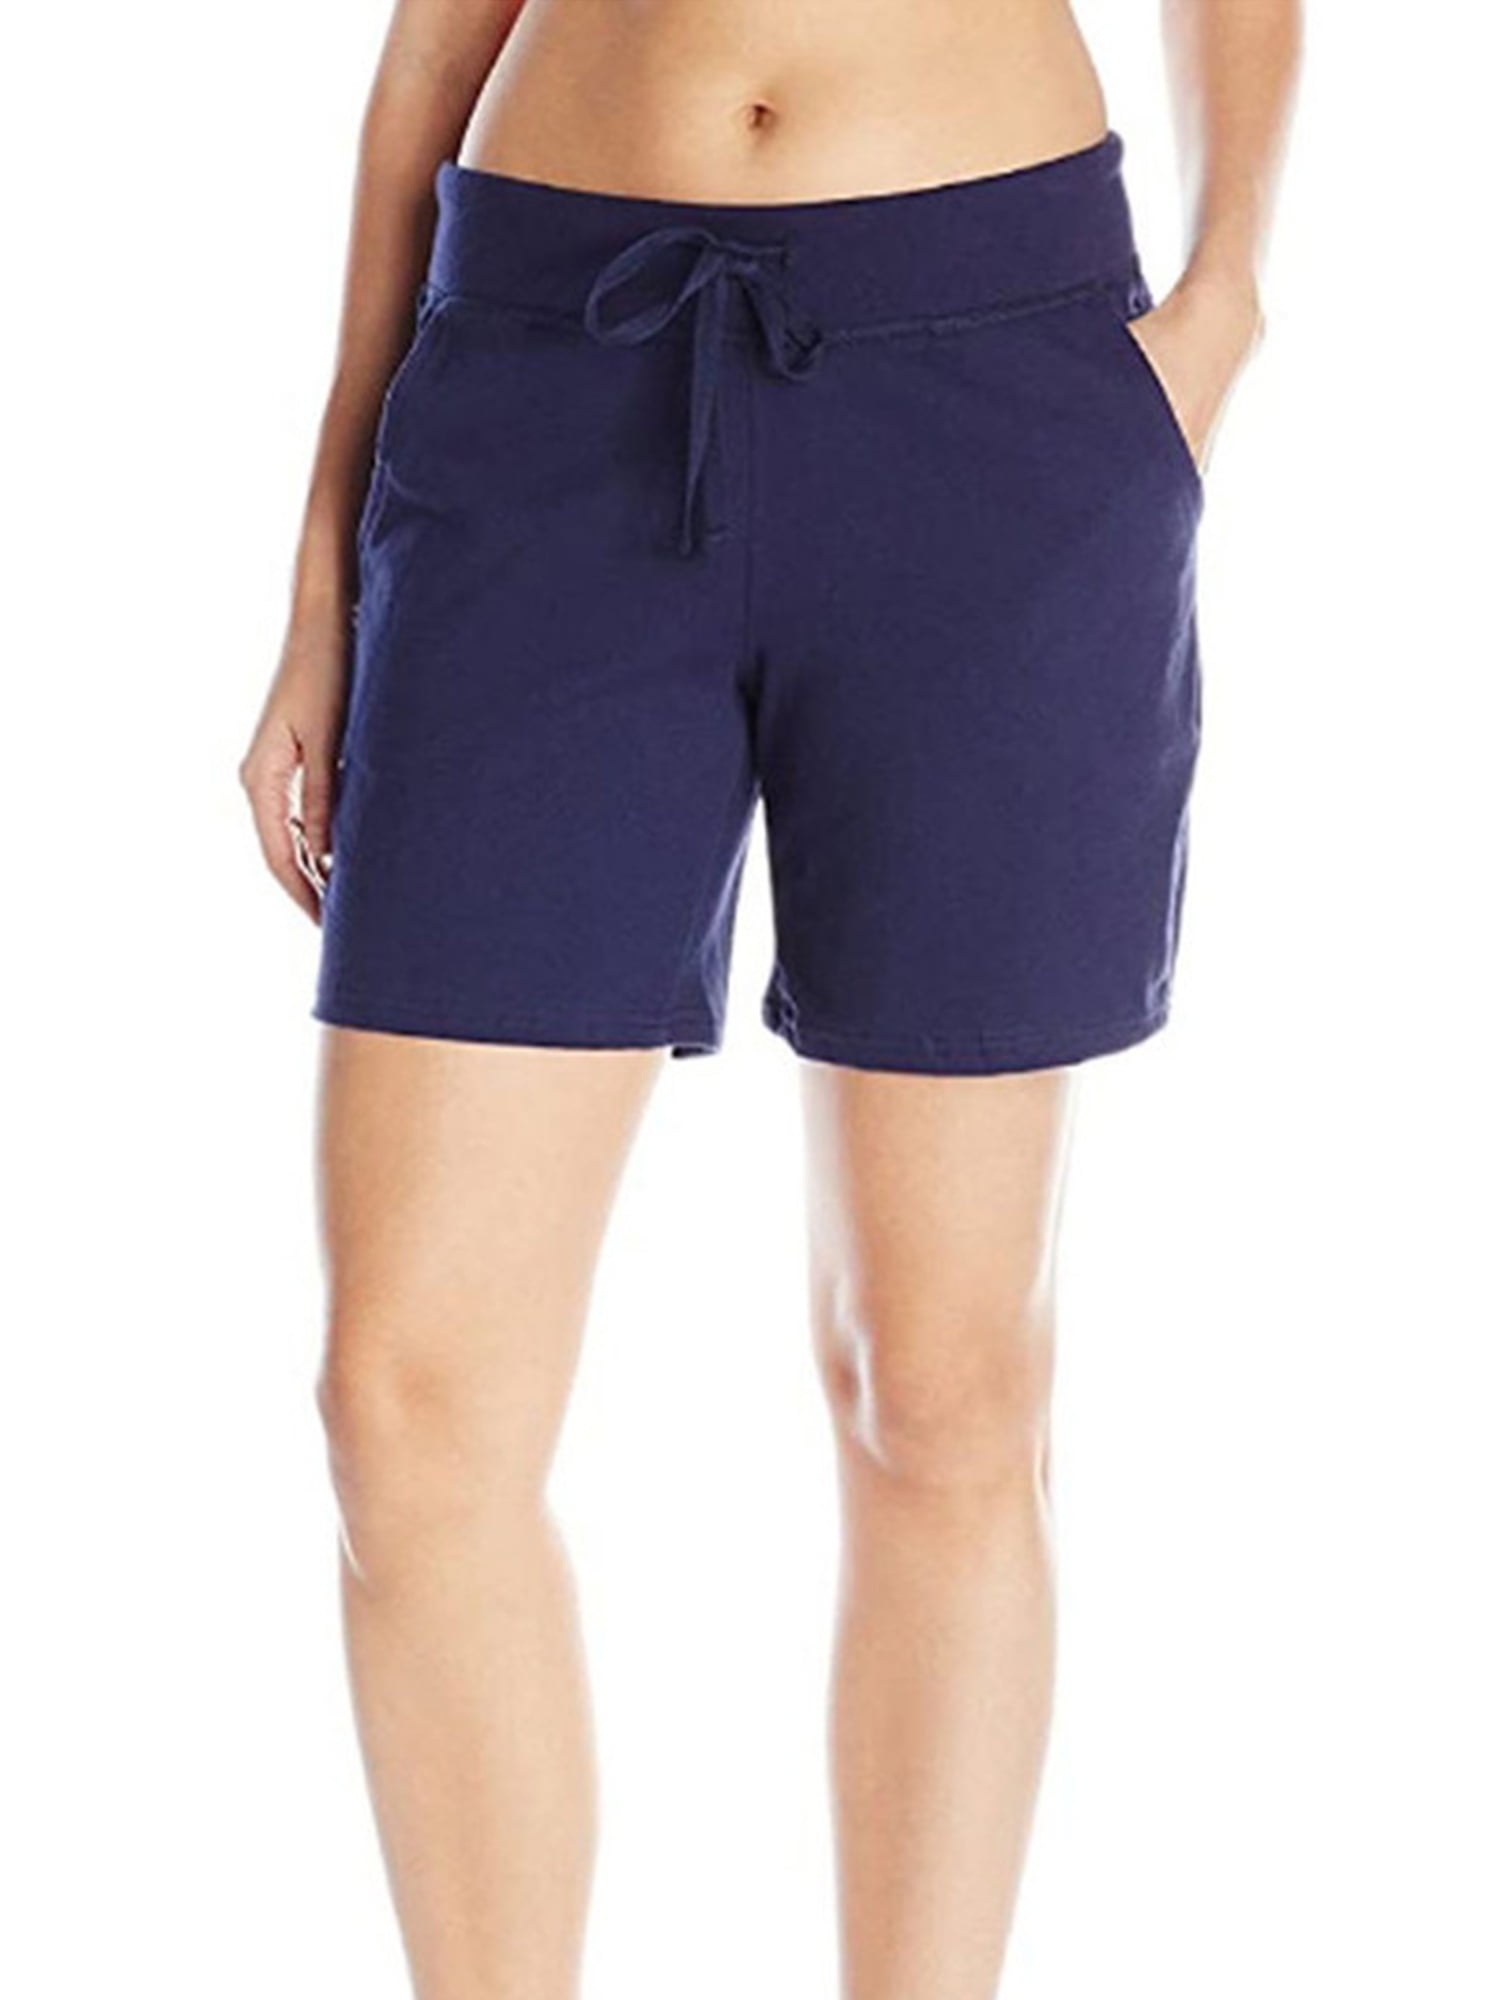 cotton jersey shorts womens